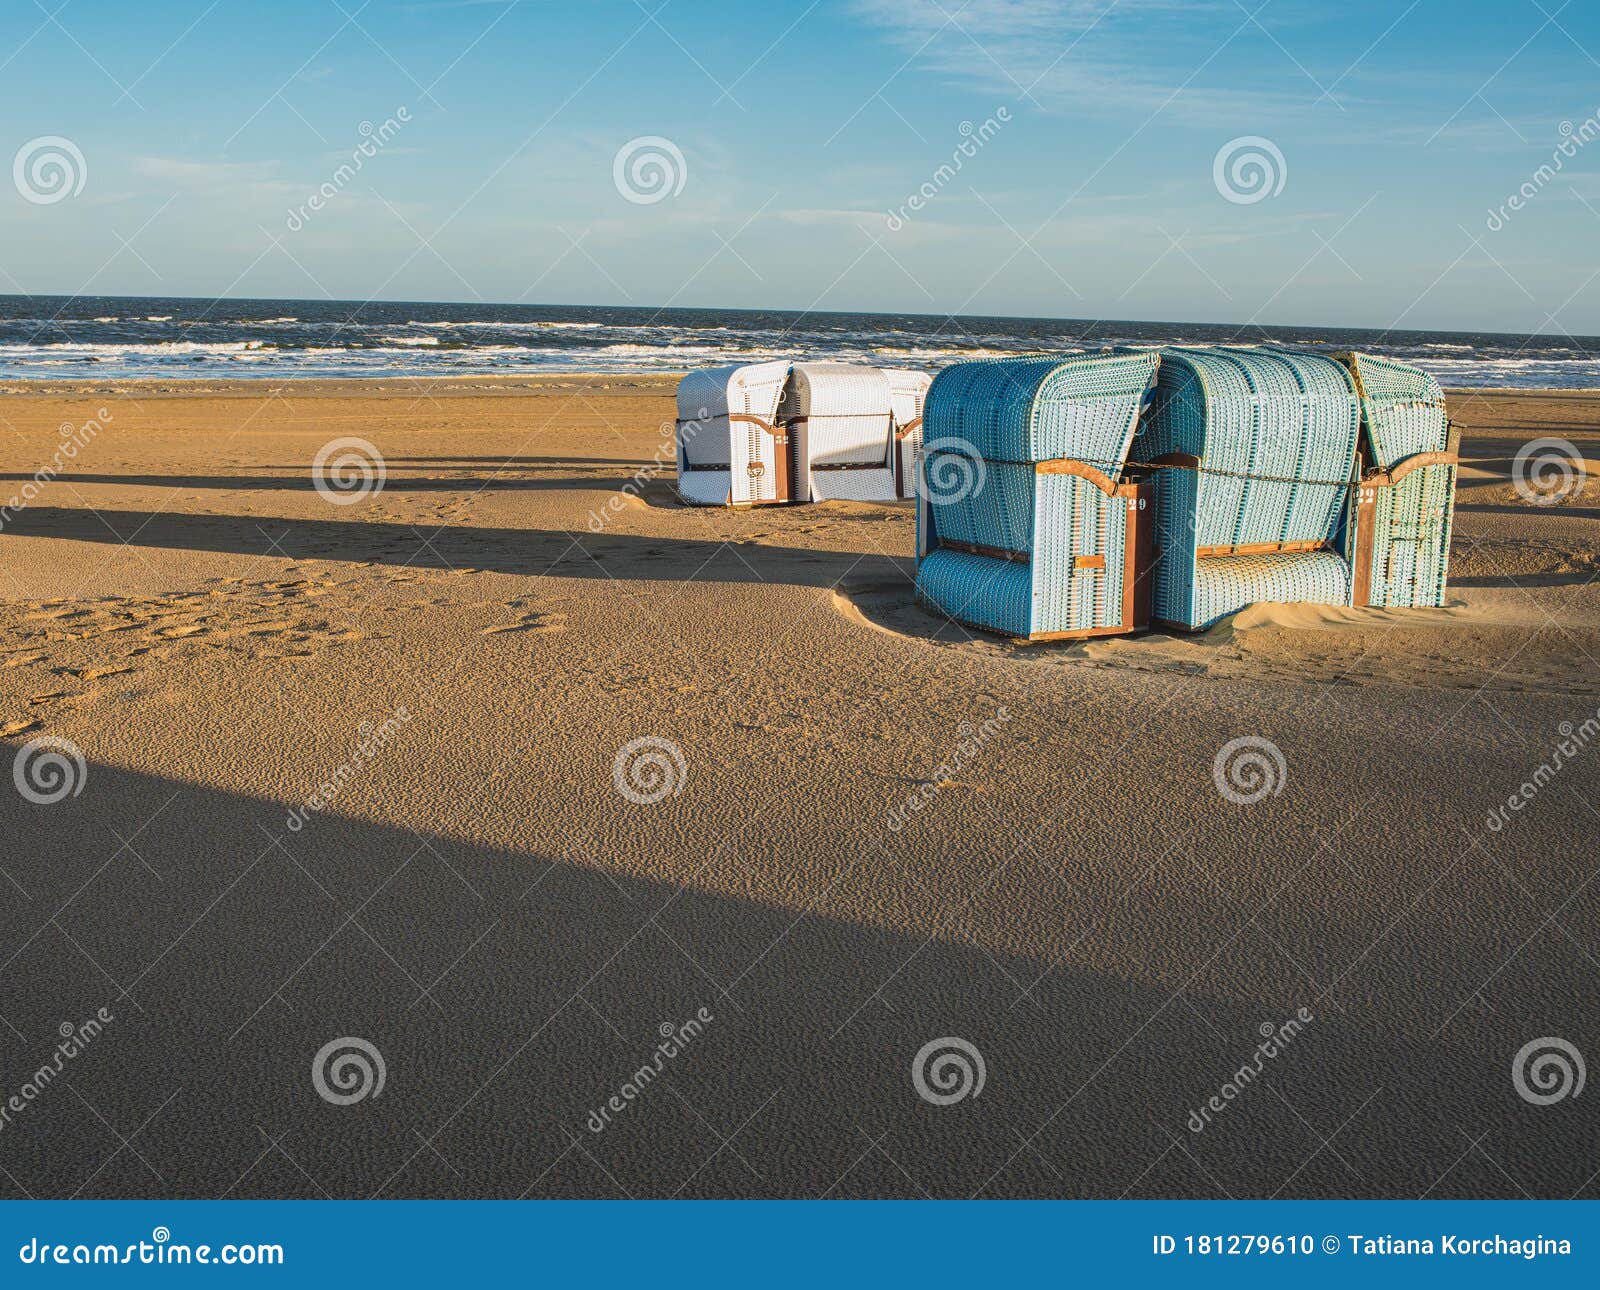 romantic summer beach with typical  dutch retro beachchairs in egmond aan zee, netherlands, europe